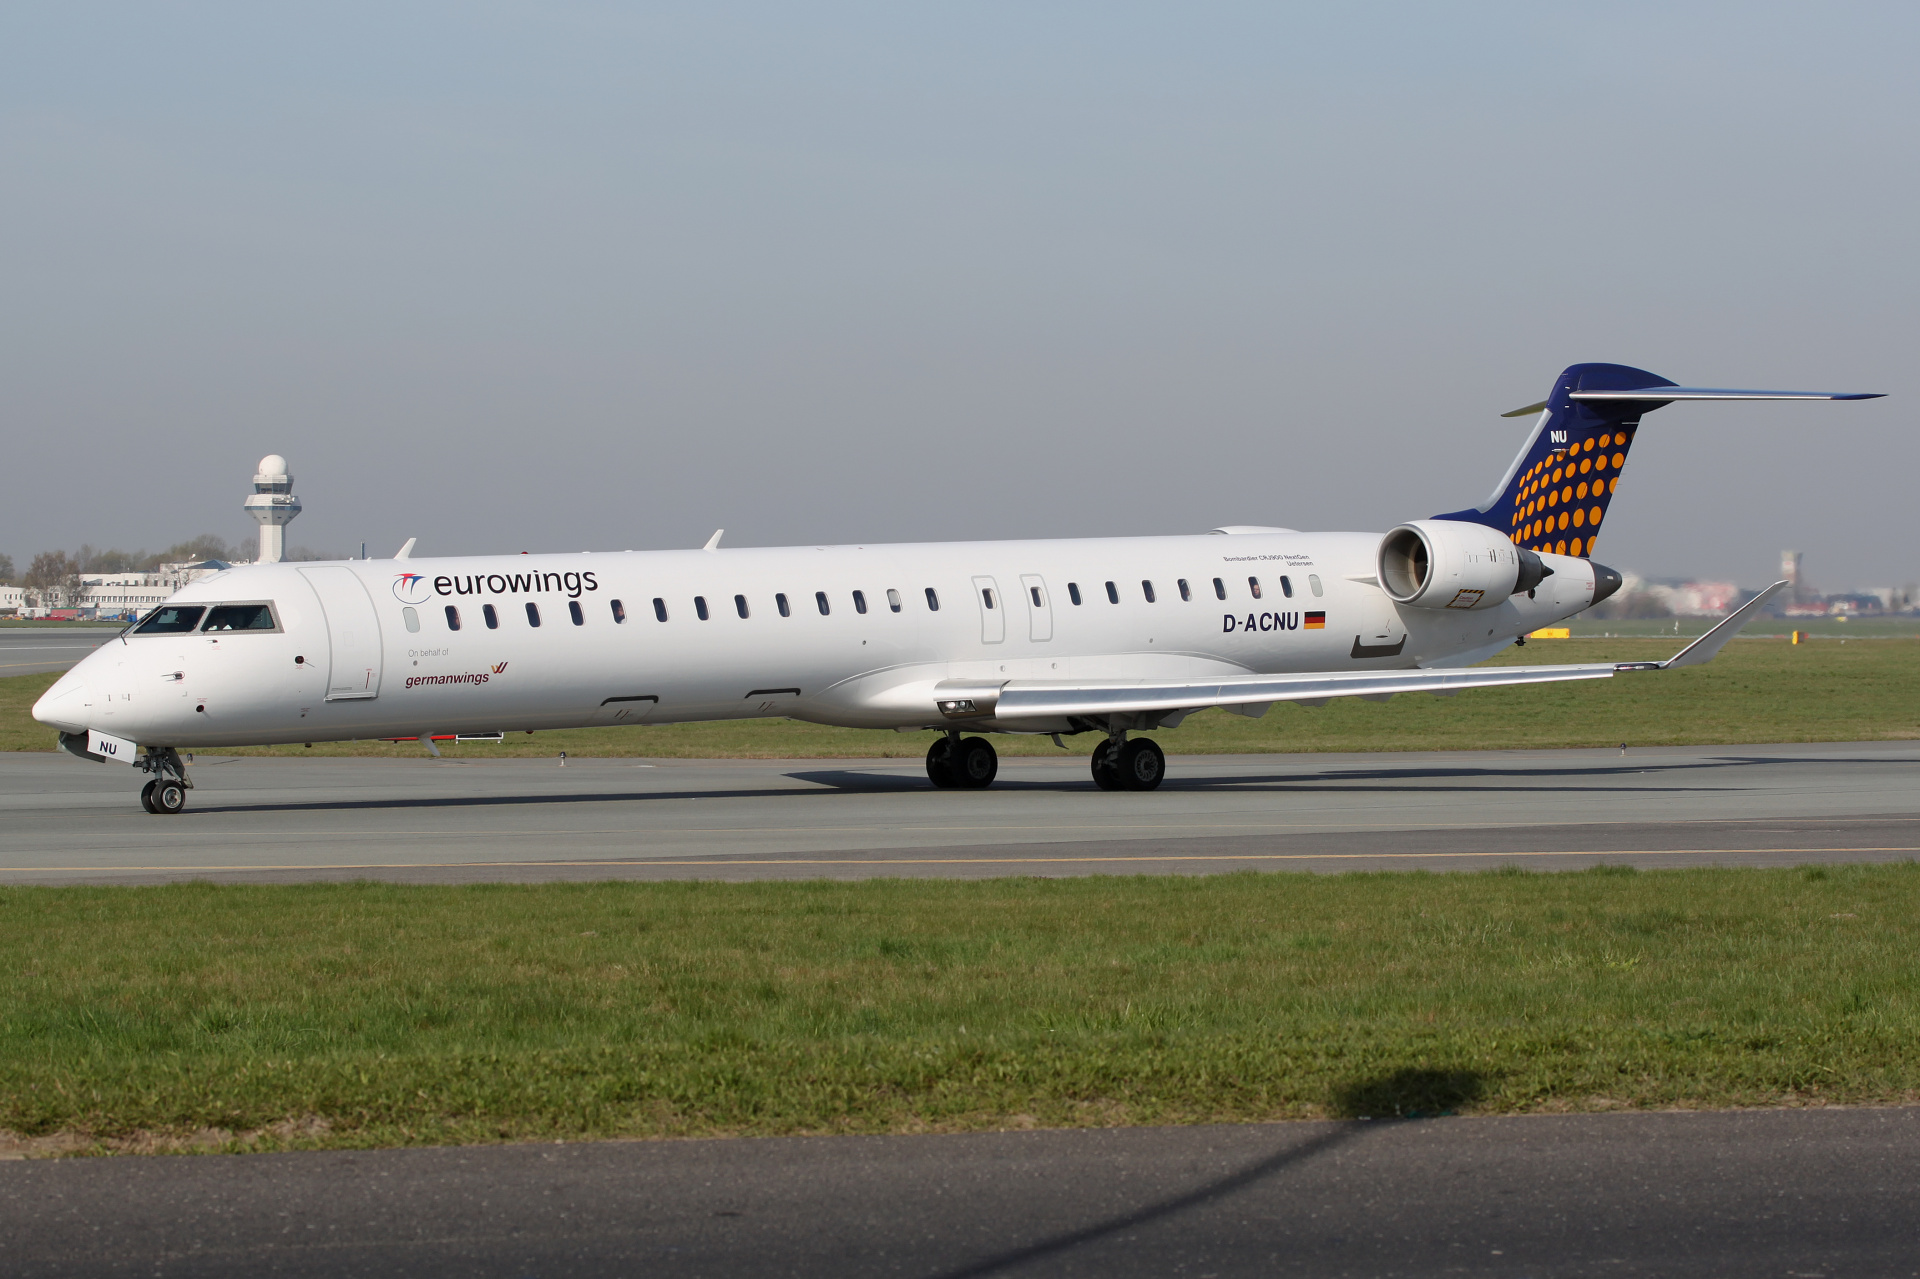 D-ACNU, Eurowings (Germanwings) (Aircraft » EPWA Spotting » Mitsubishi Regional Jet » CRJ-900 » Eurowings)